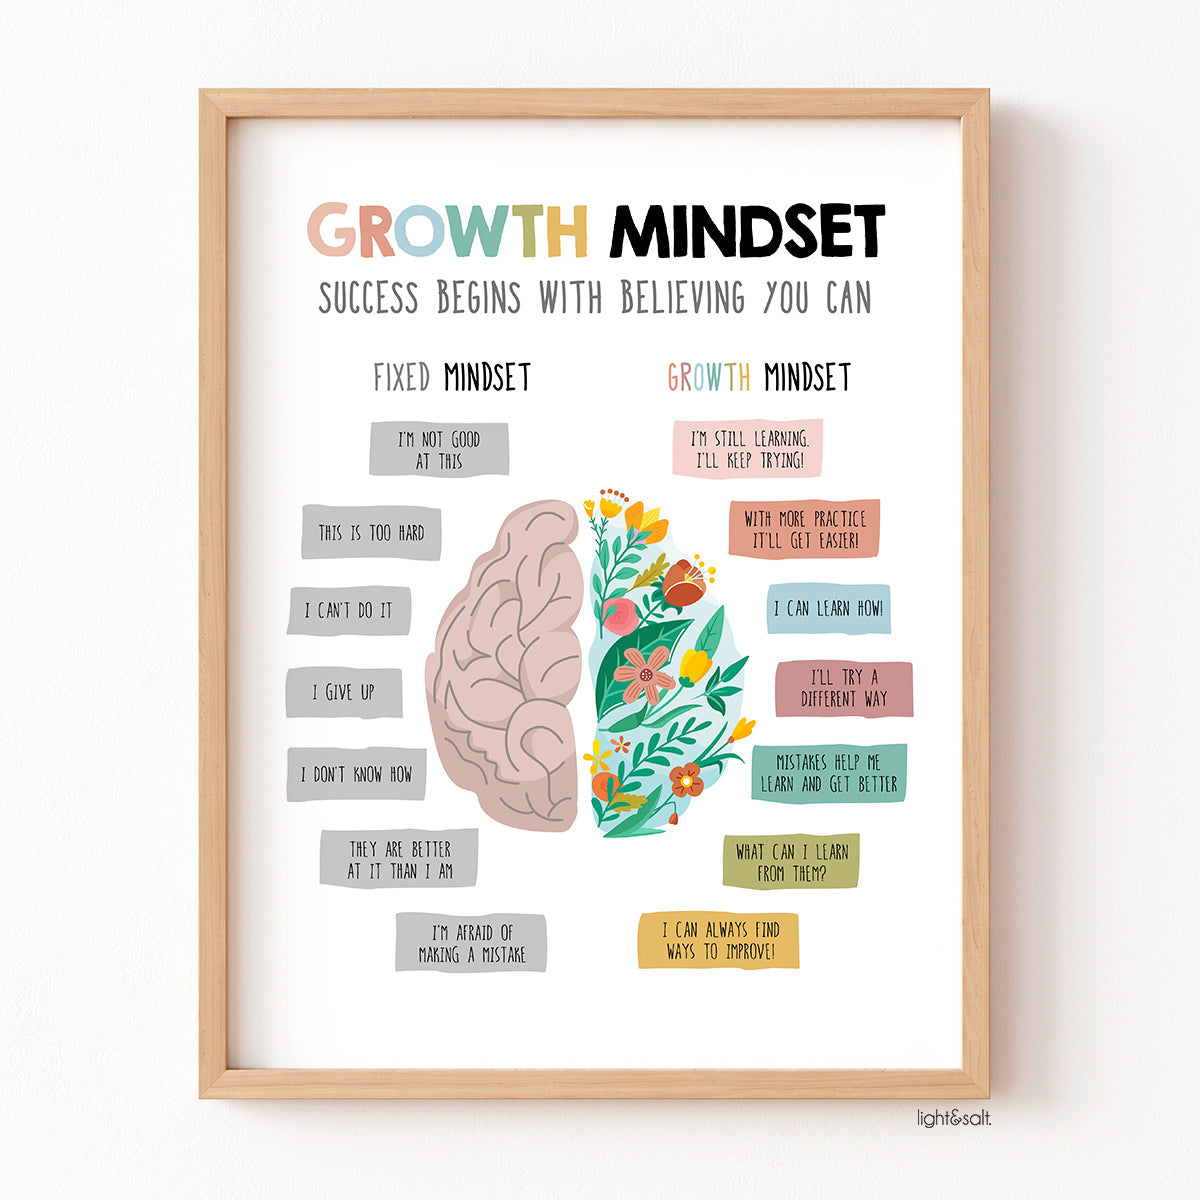 Growth mindset vs fixed mindset physical print